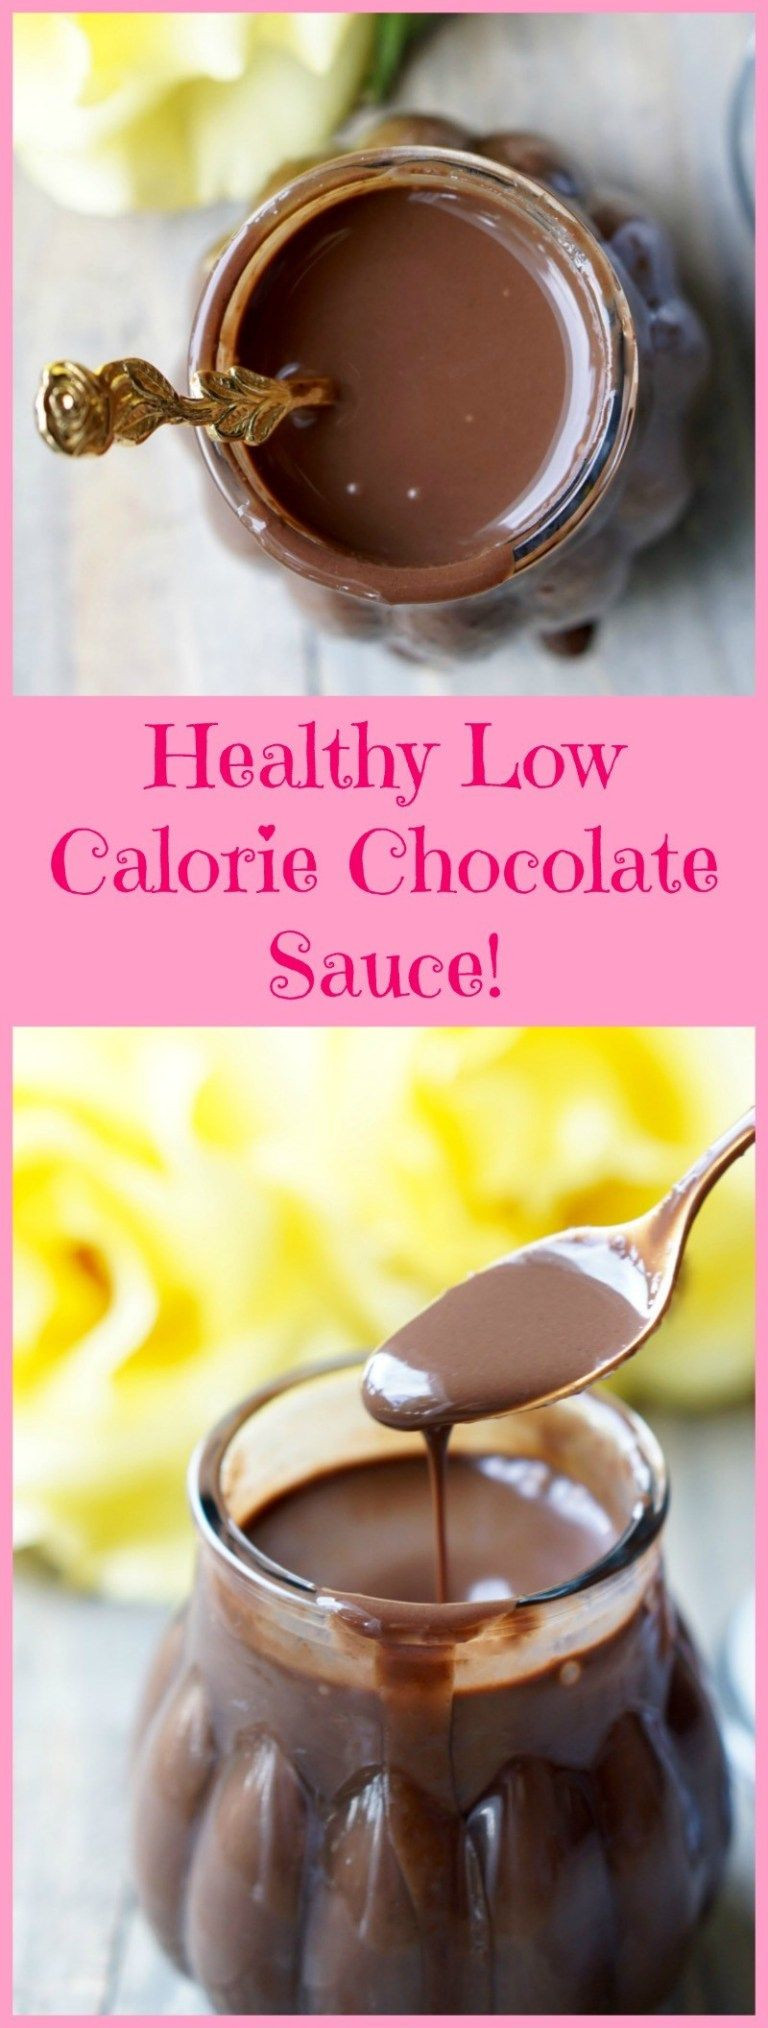 Low Calorie Chocolate Recipes
 Low Calorie Chocolate Sauce Recipe